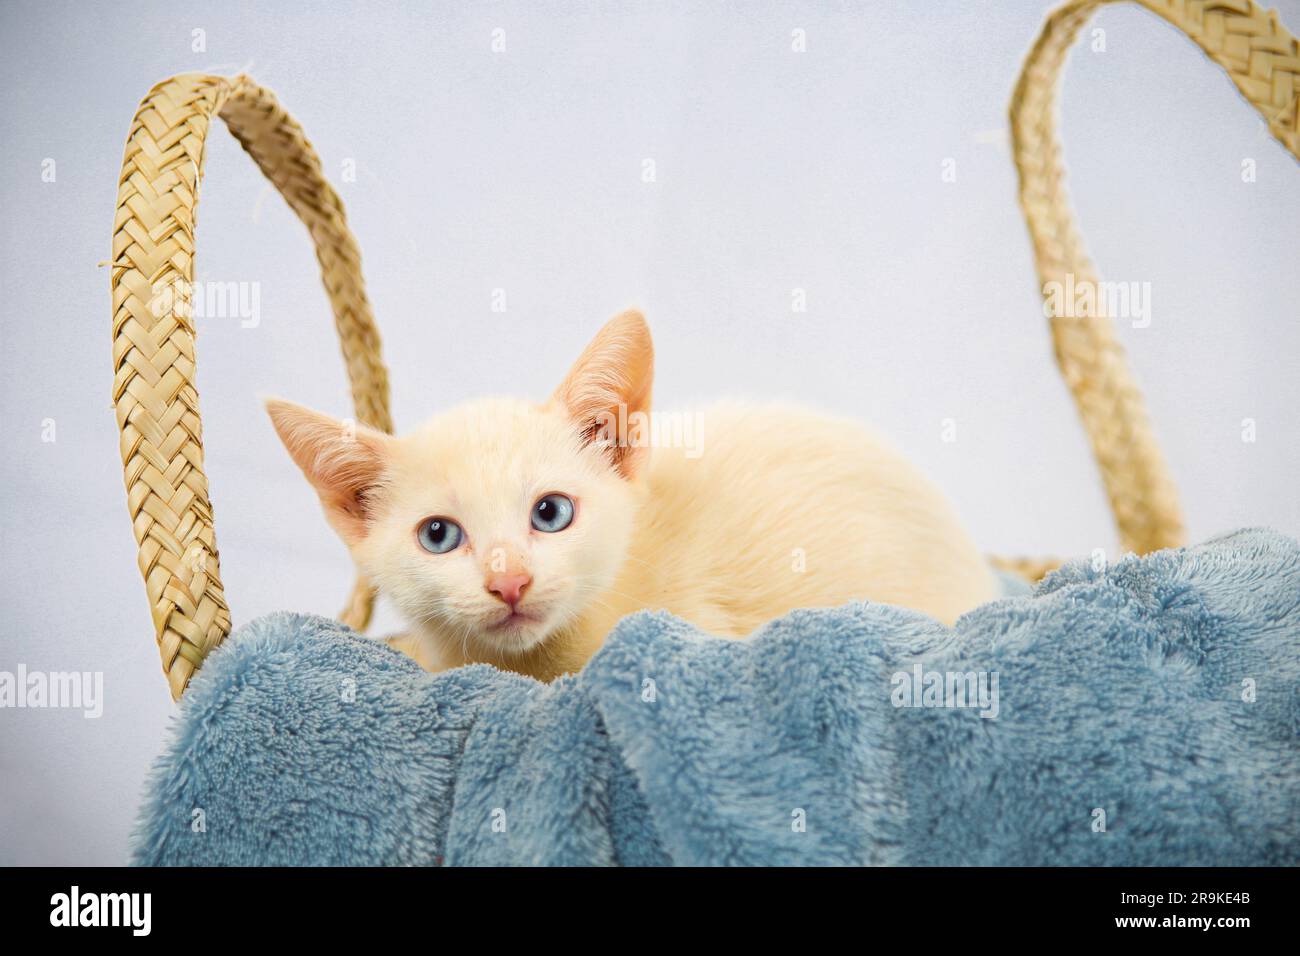 Fotoshooting von 8 Katzen zur Adoption Stockfoto